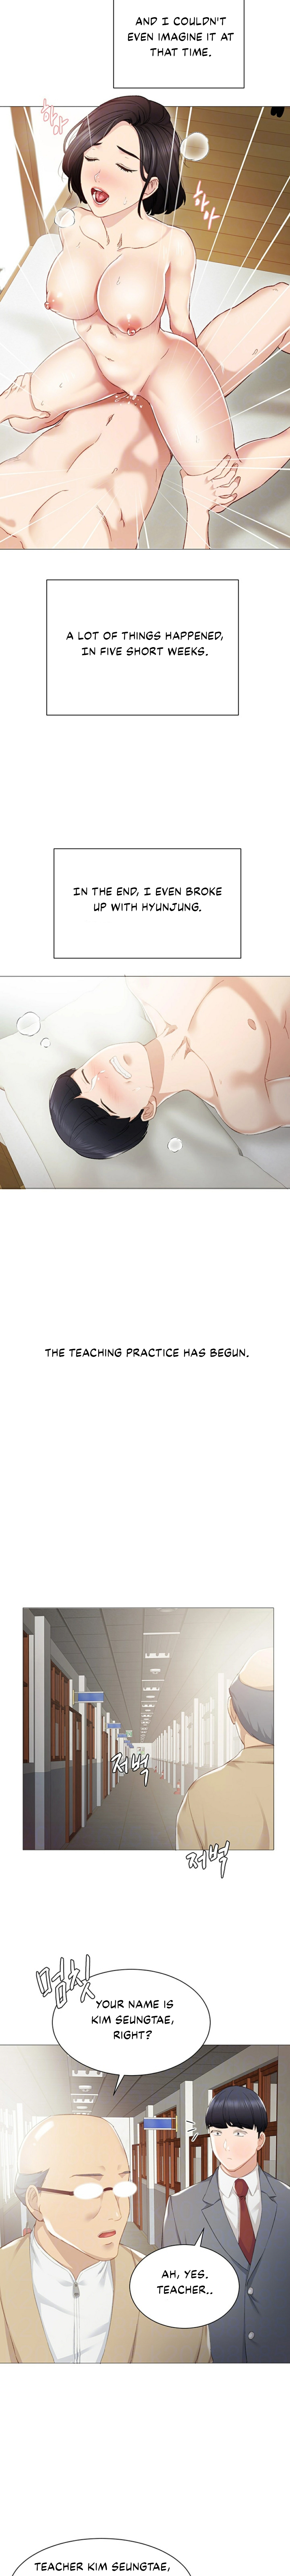 Teaching Practice image